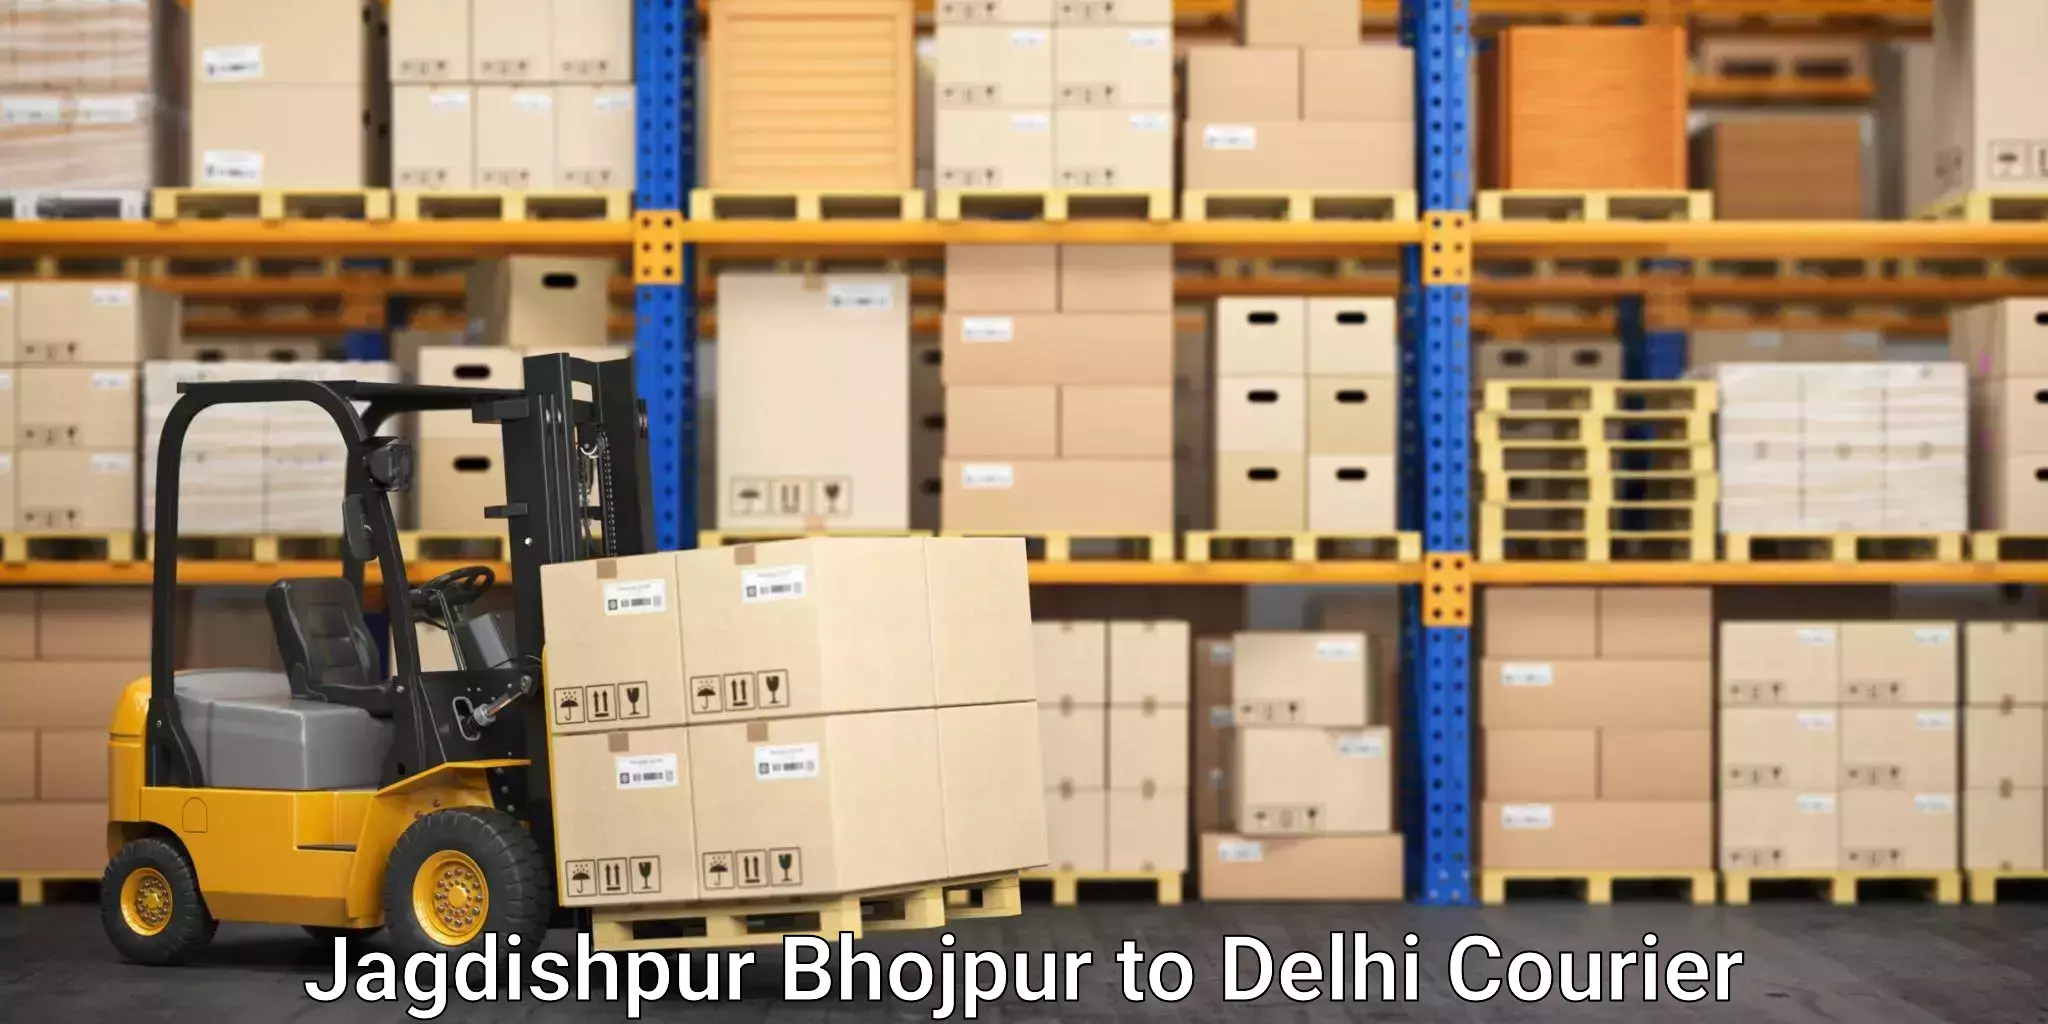 Furniture delivery service Jagdishpur Bhojpur to IIT Delhi